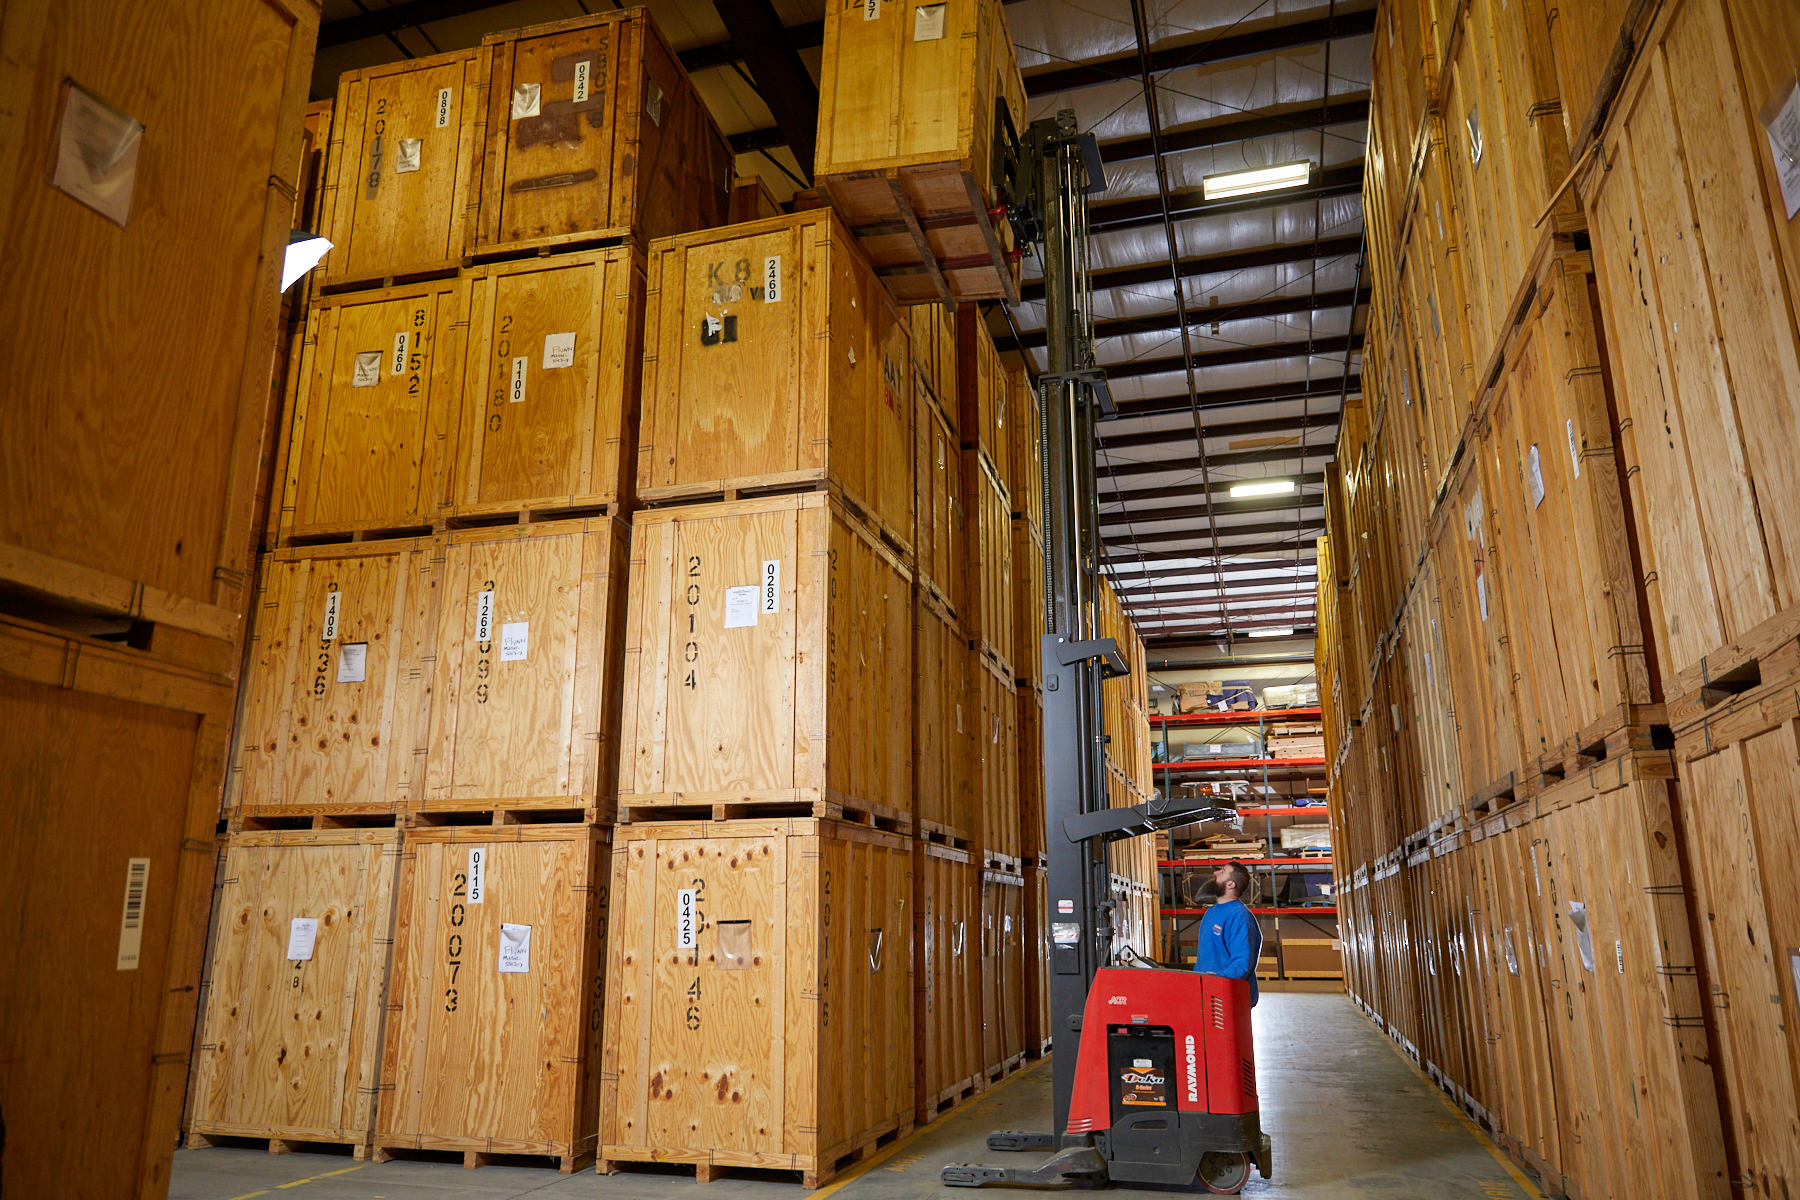 Humboldt storage facility